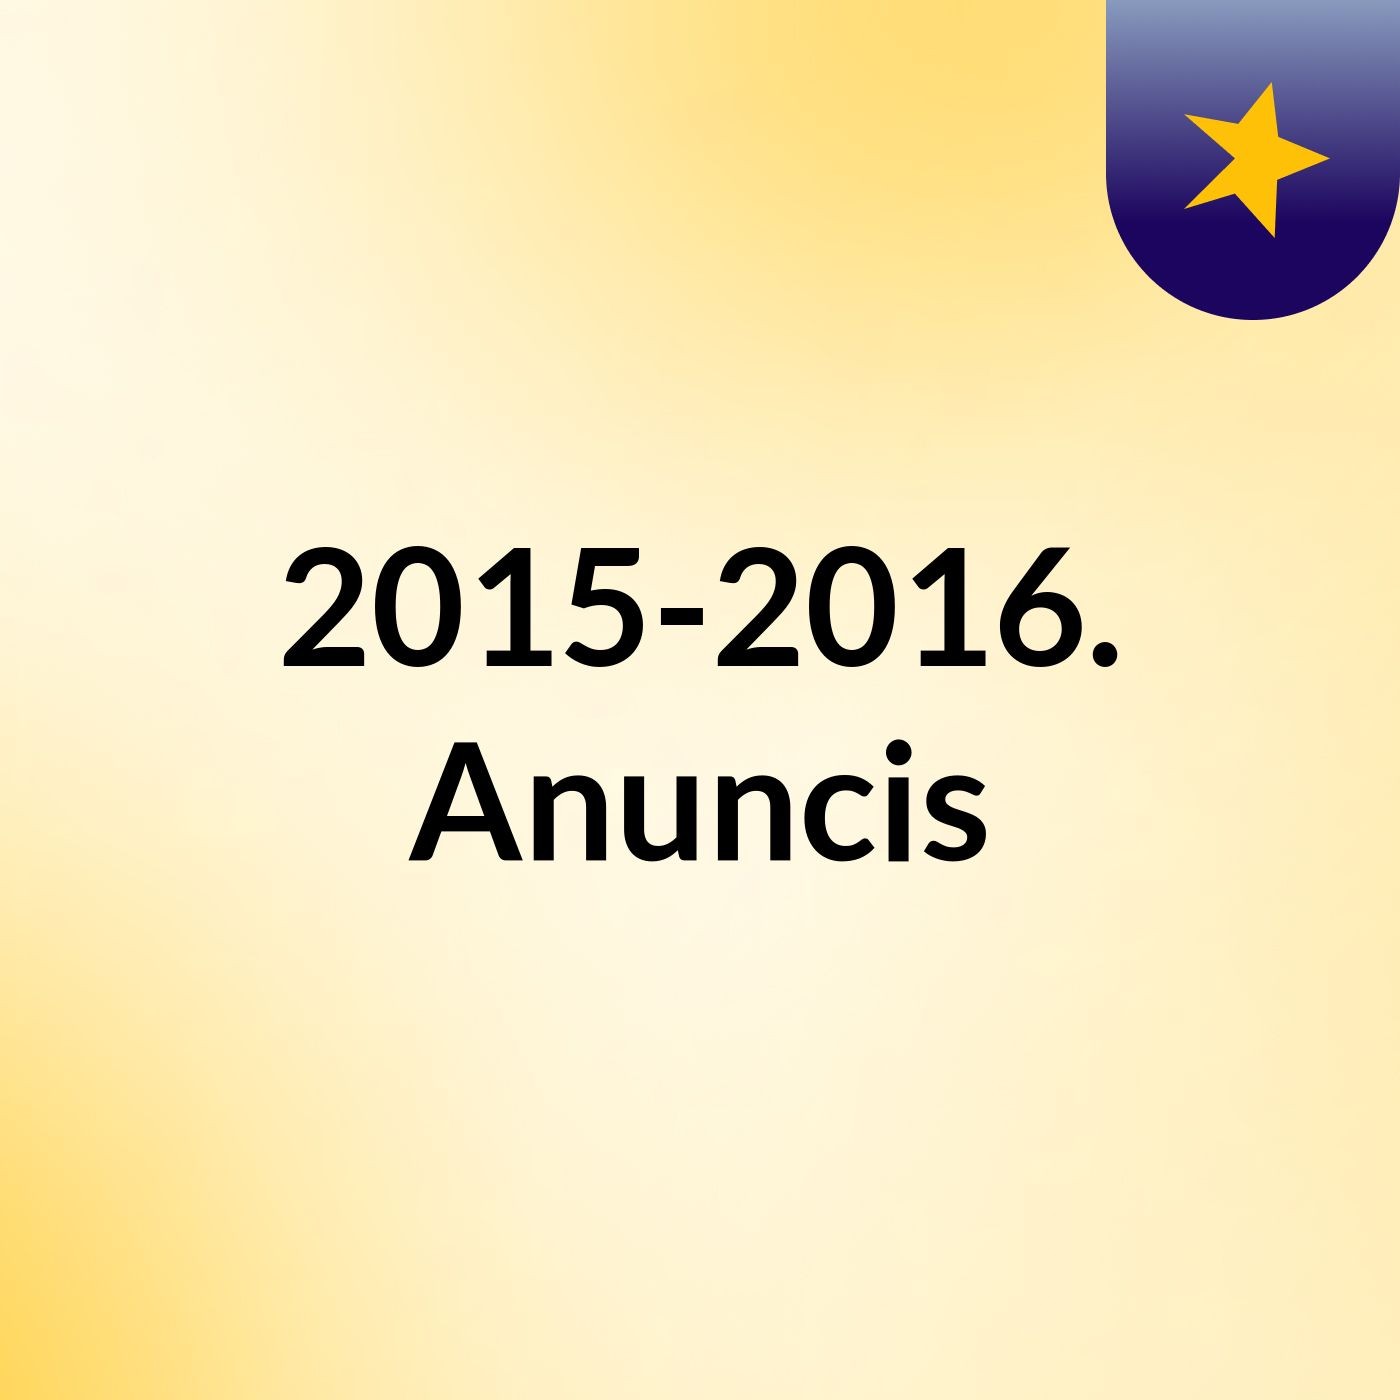 2015-2016. Anuncis